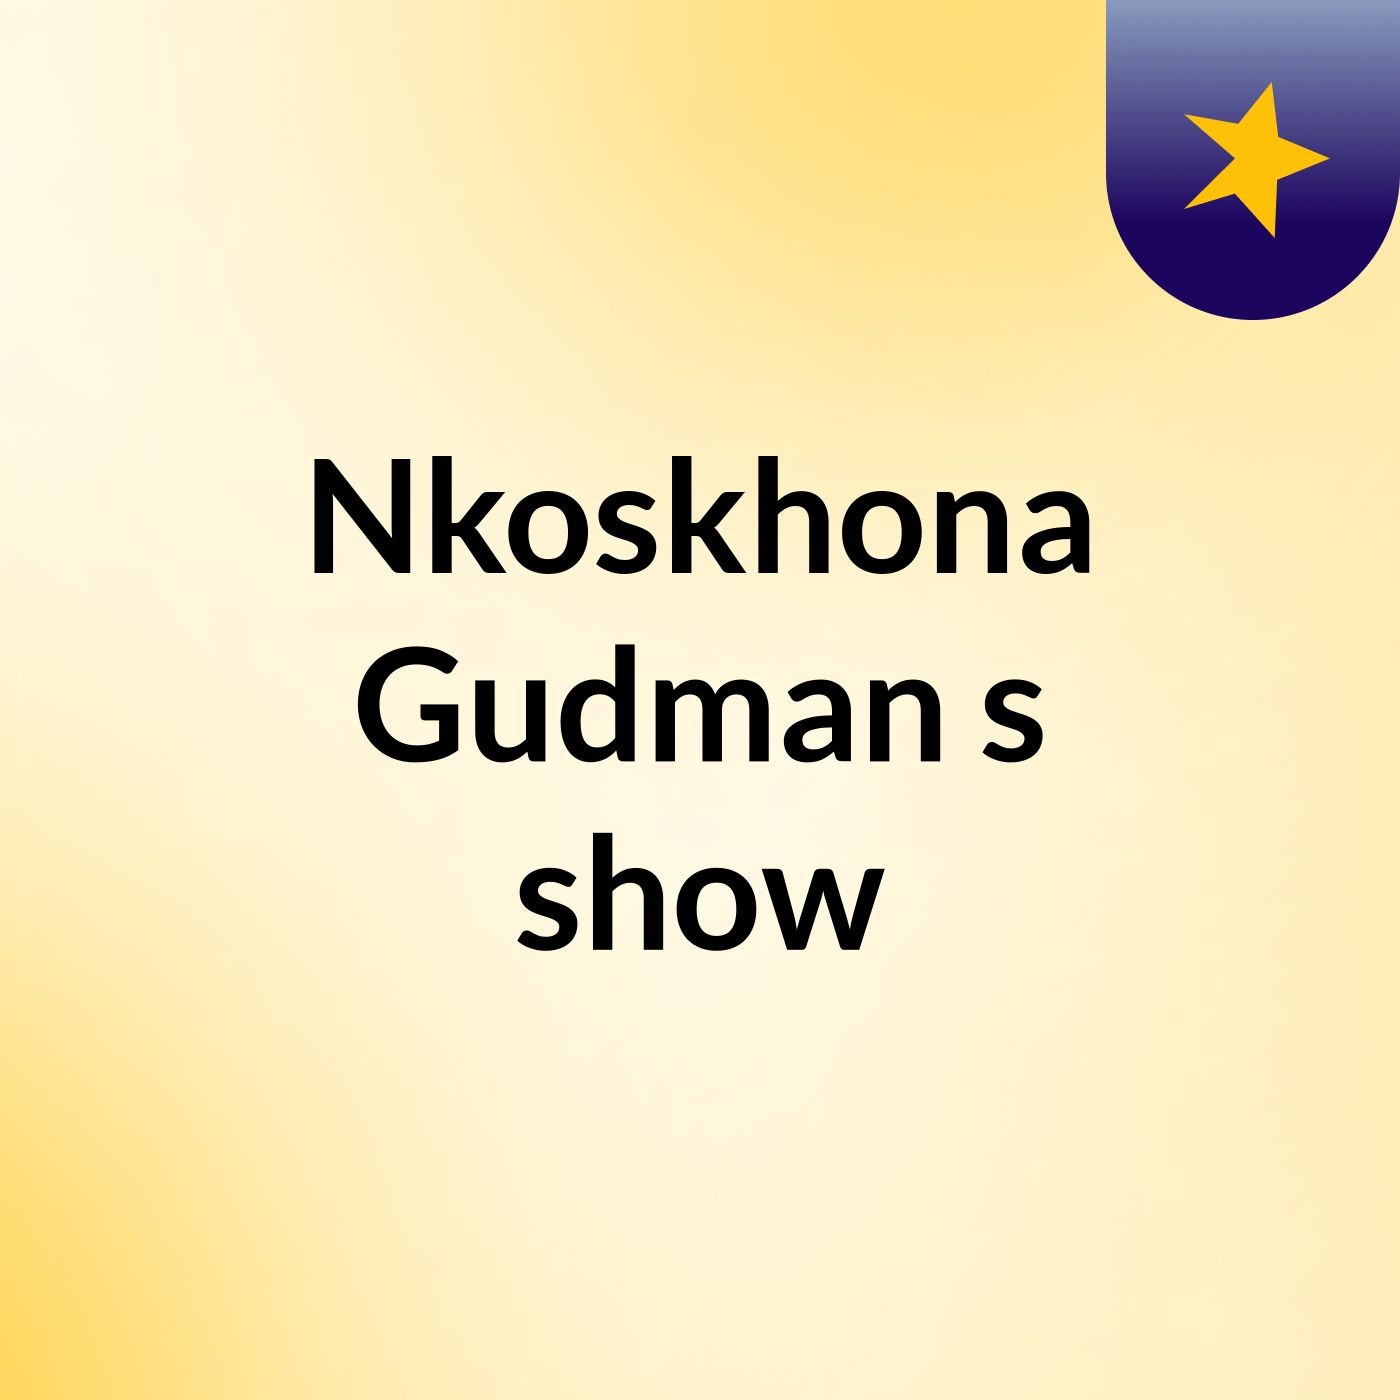 Episode 14 - Nkoskhona Gudman's show